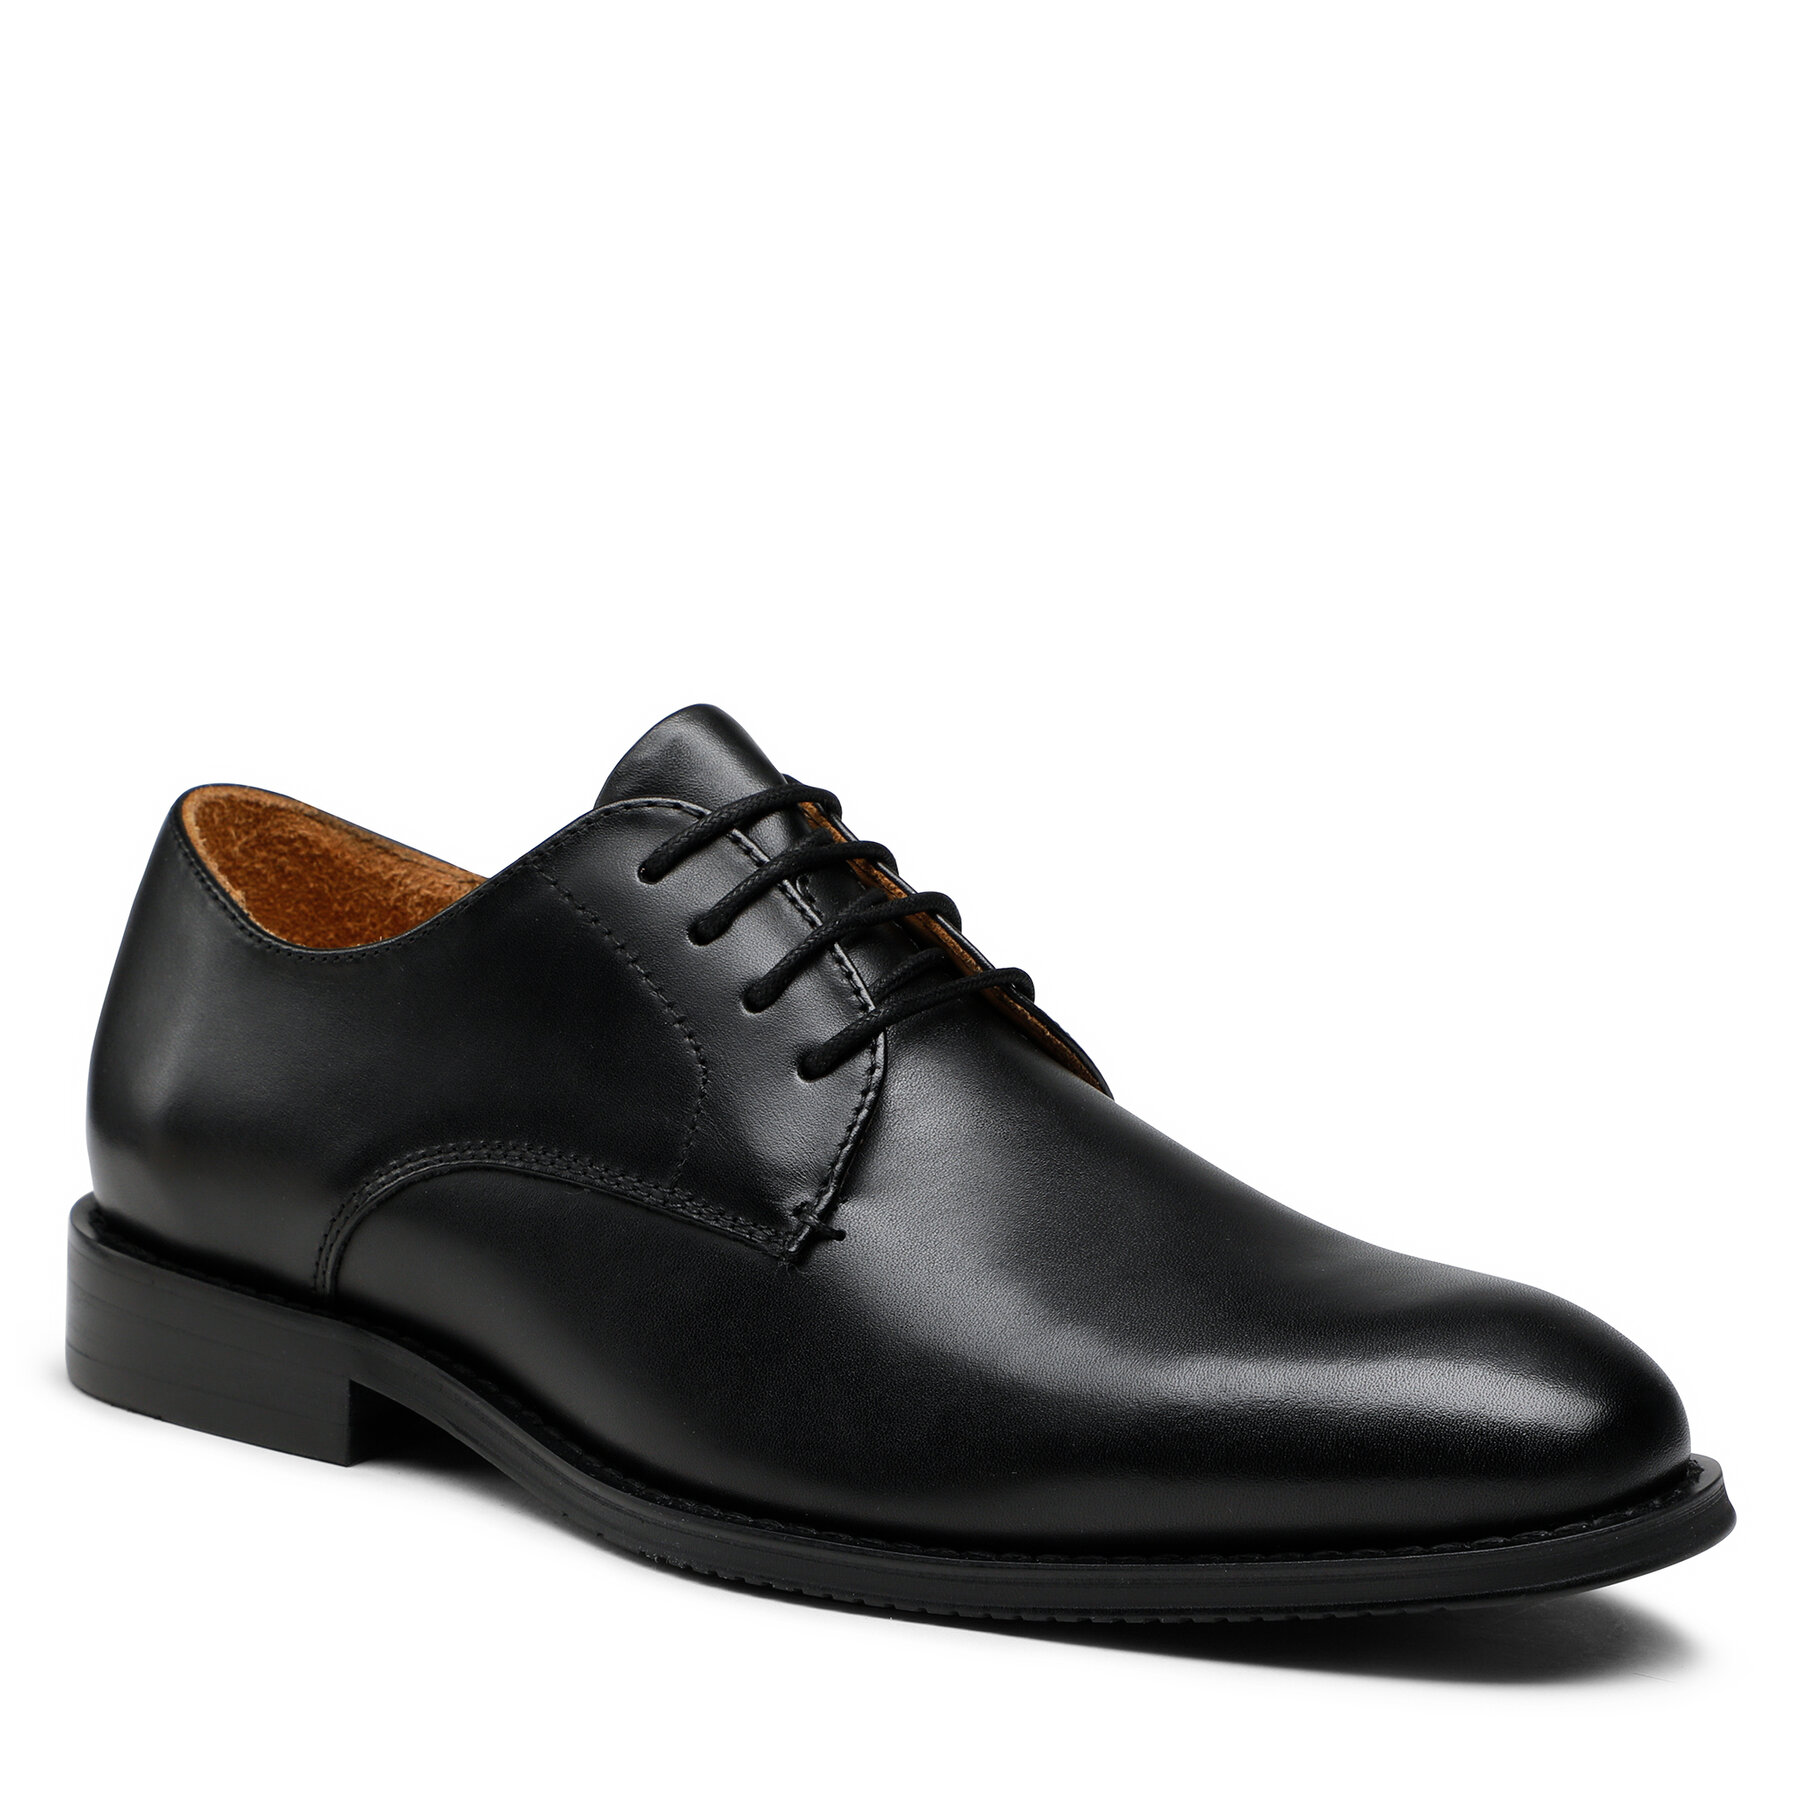 Cipele Gino Rossi FABIO-01 122AM Black